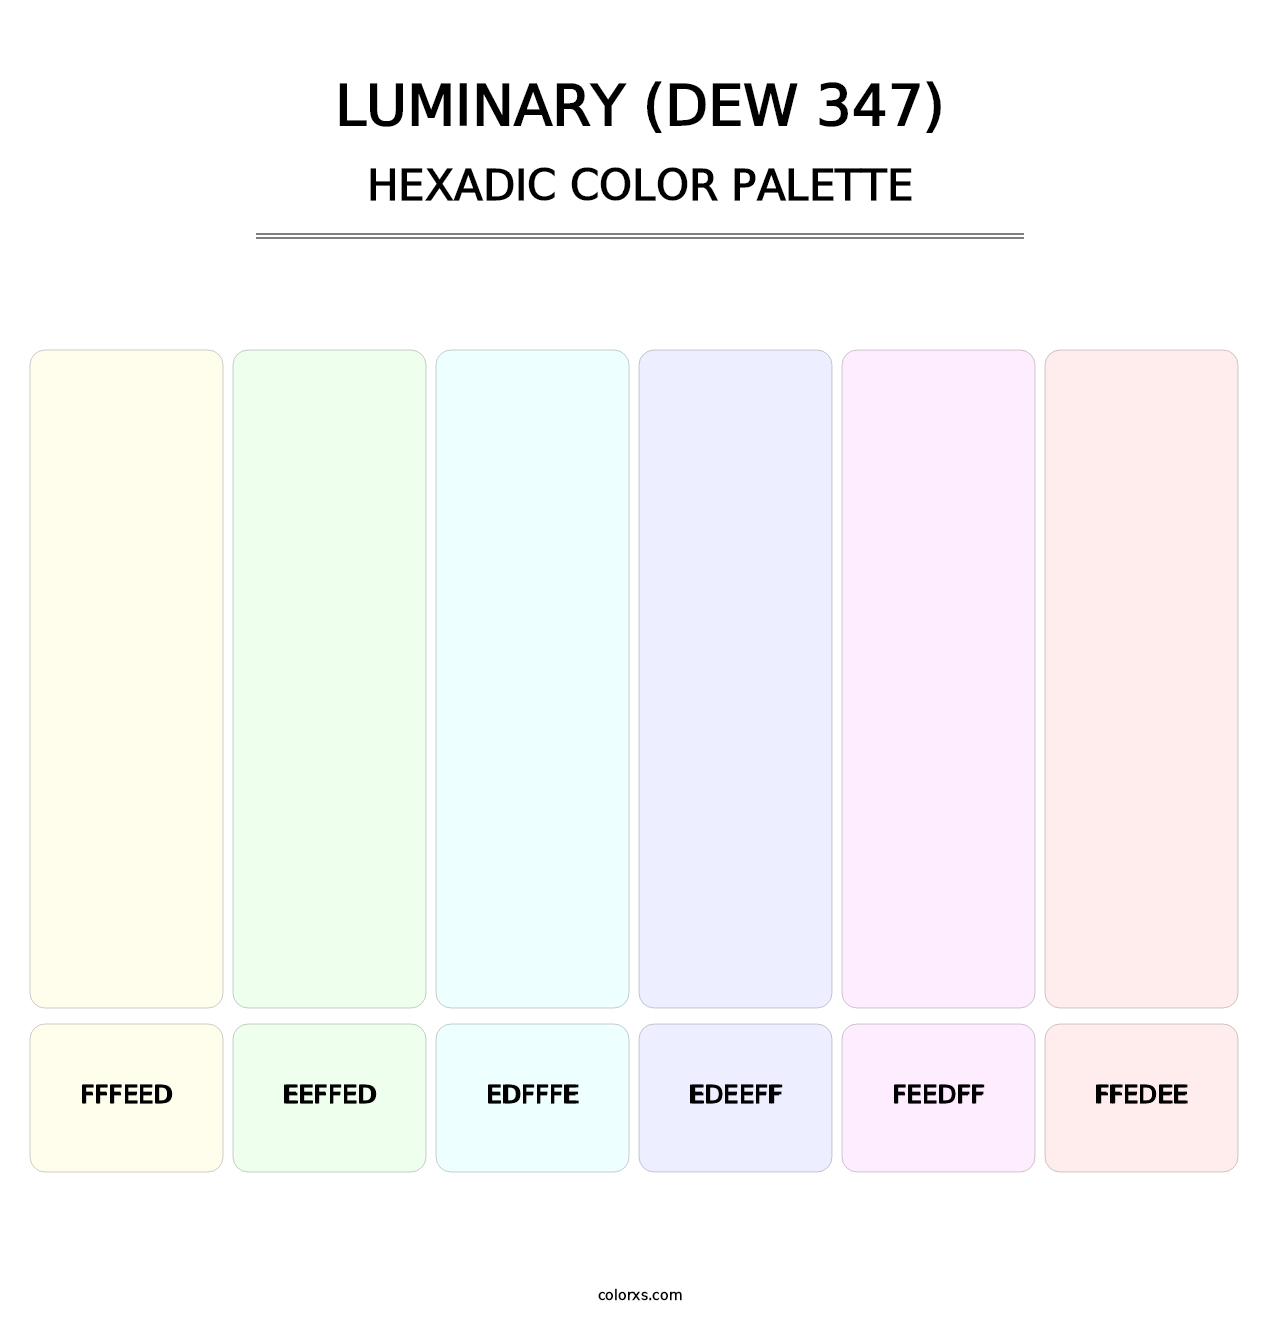 Luminary (DEW 347) - Hexadic Color Palette